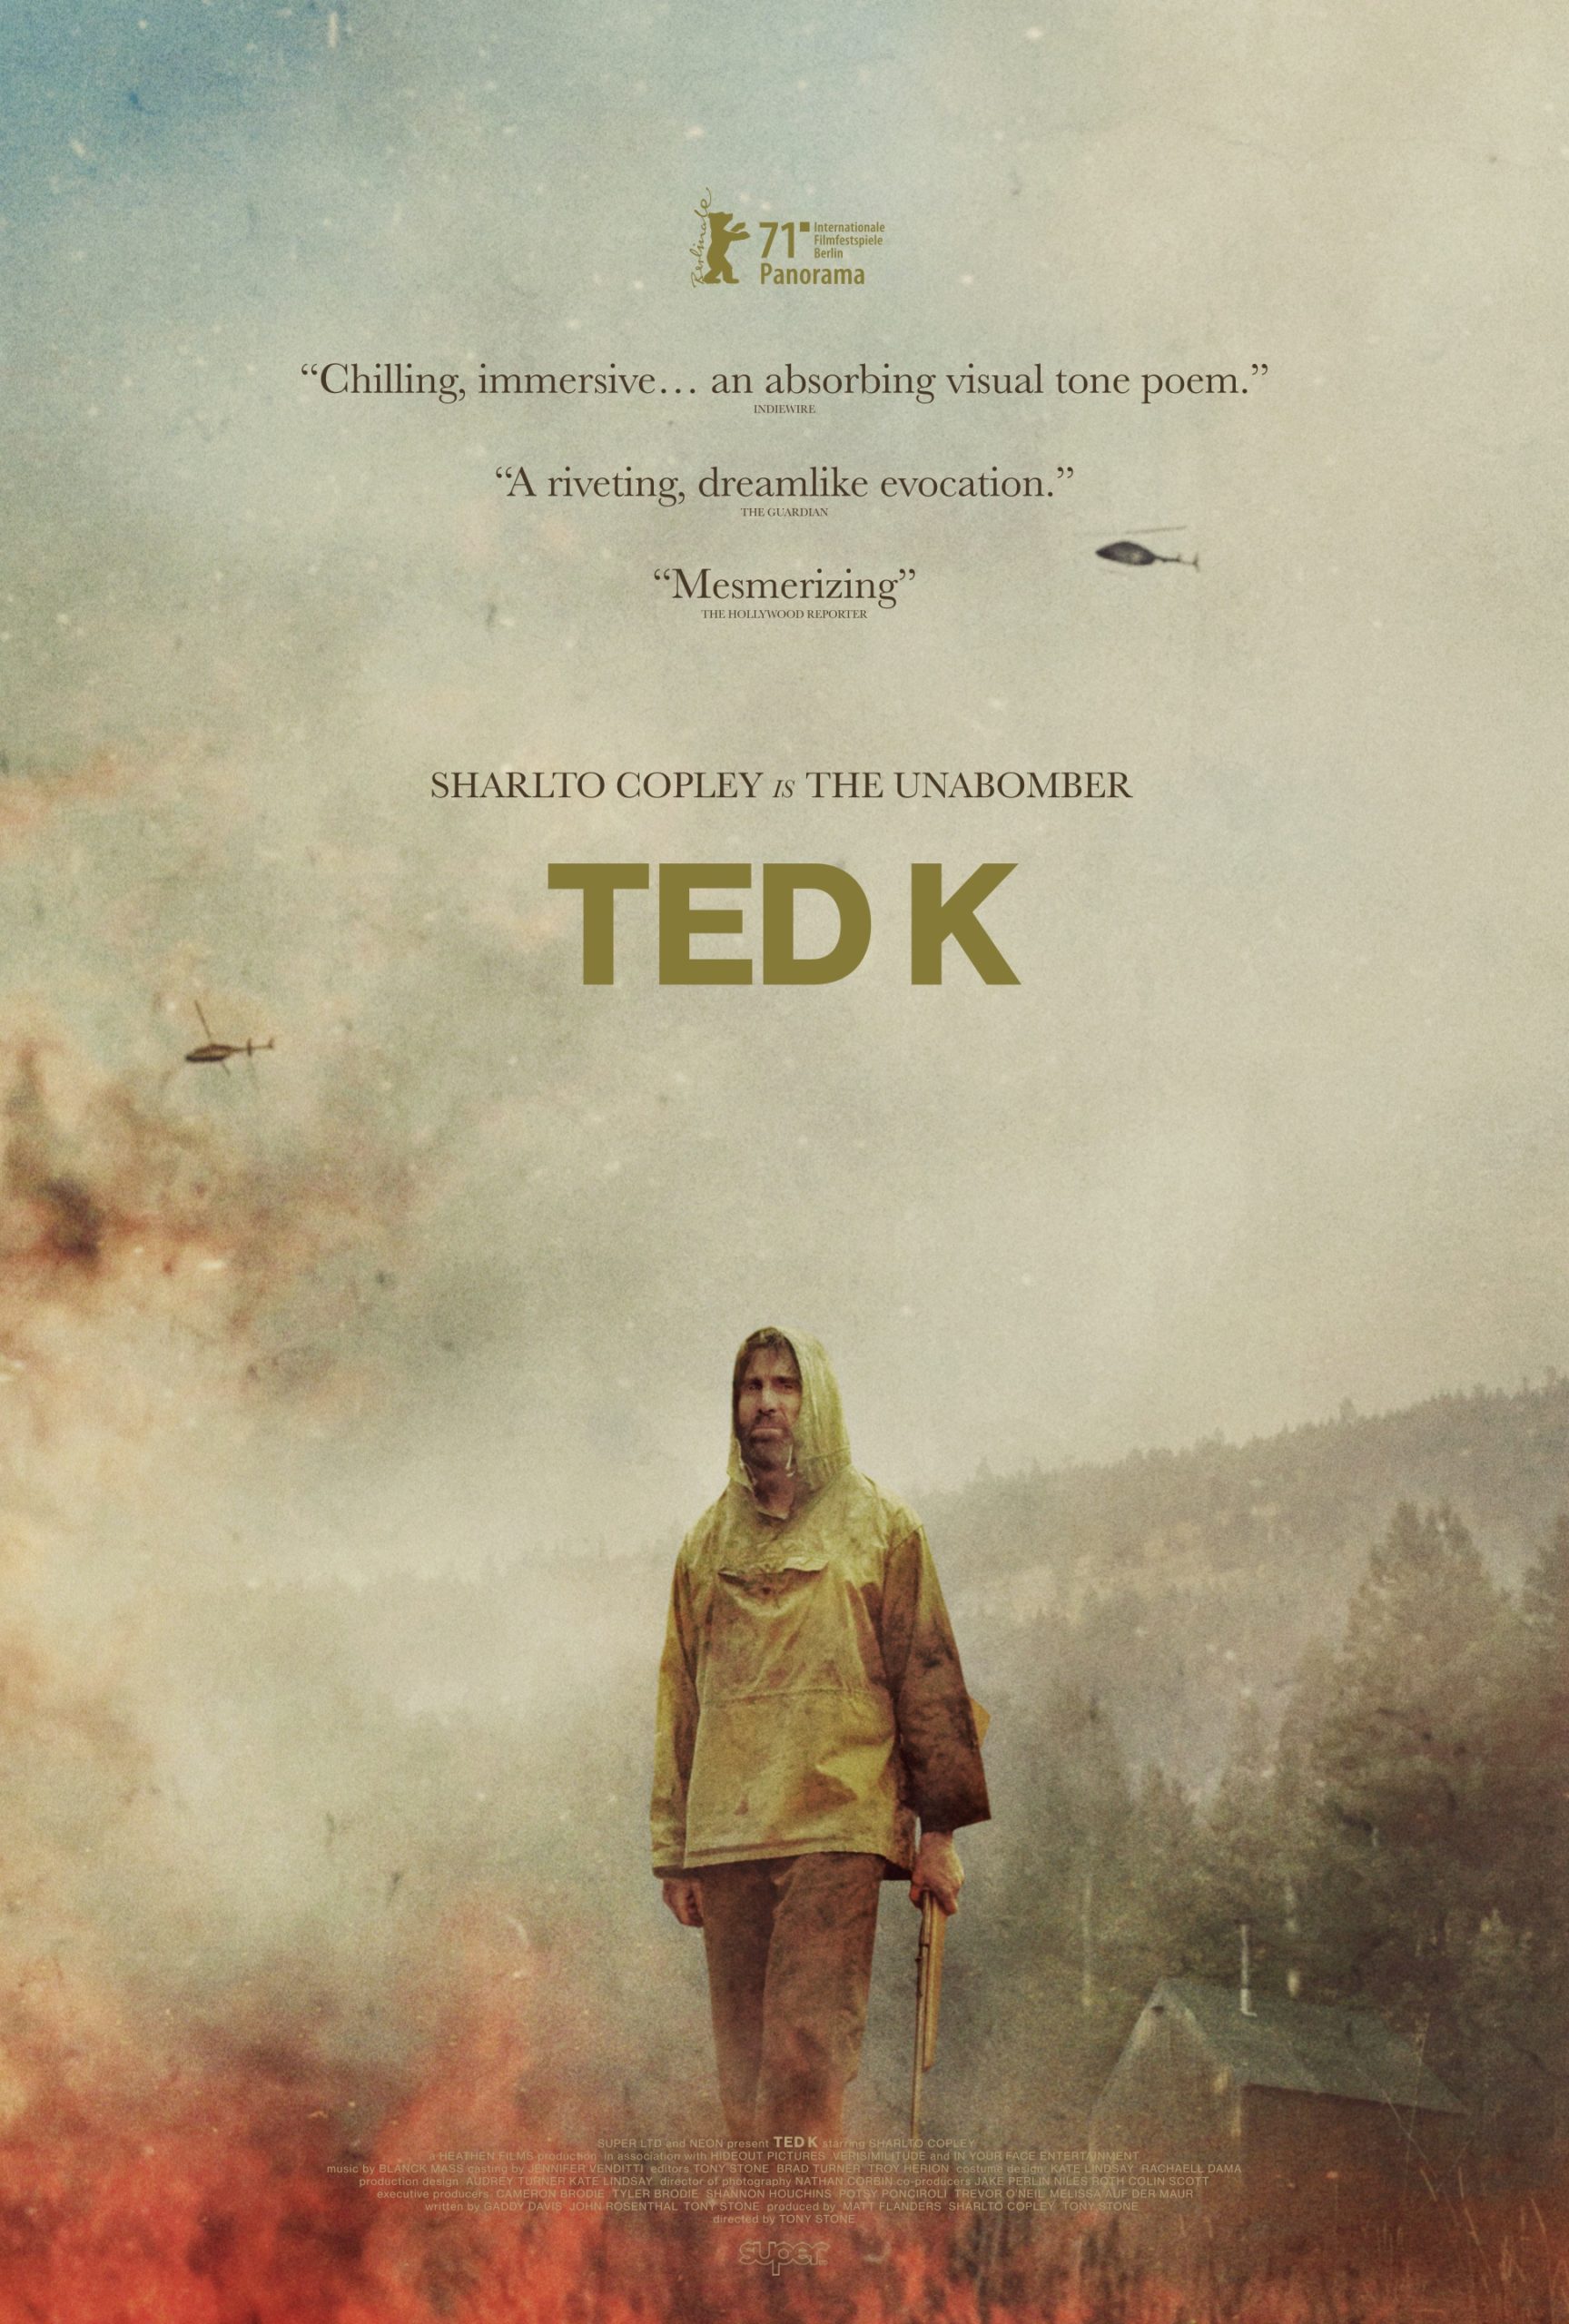 Ted K Walks through misty fire